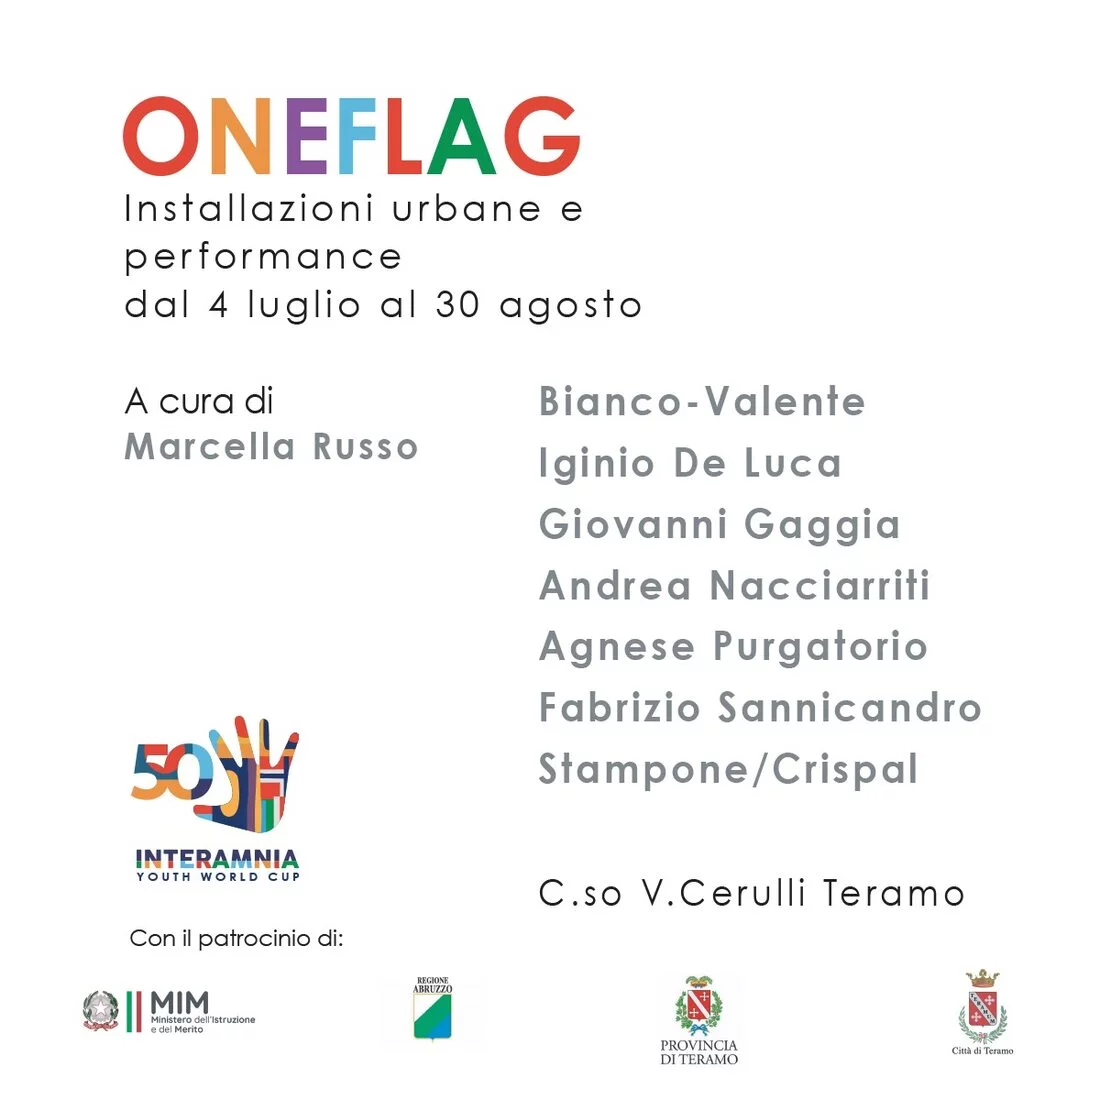 OneFlag. Installazioni urbane e performance